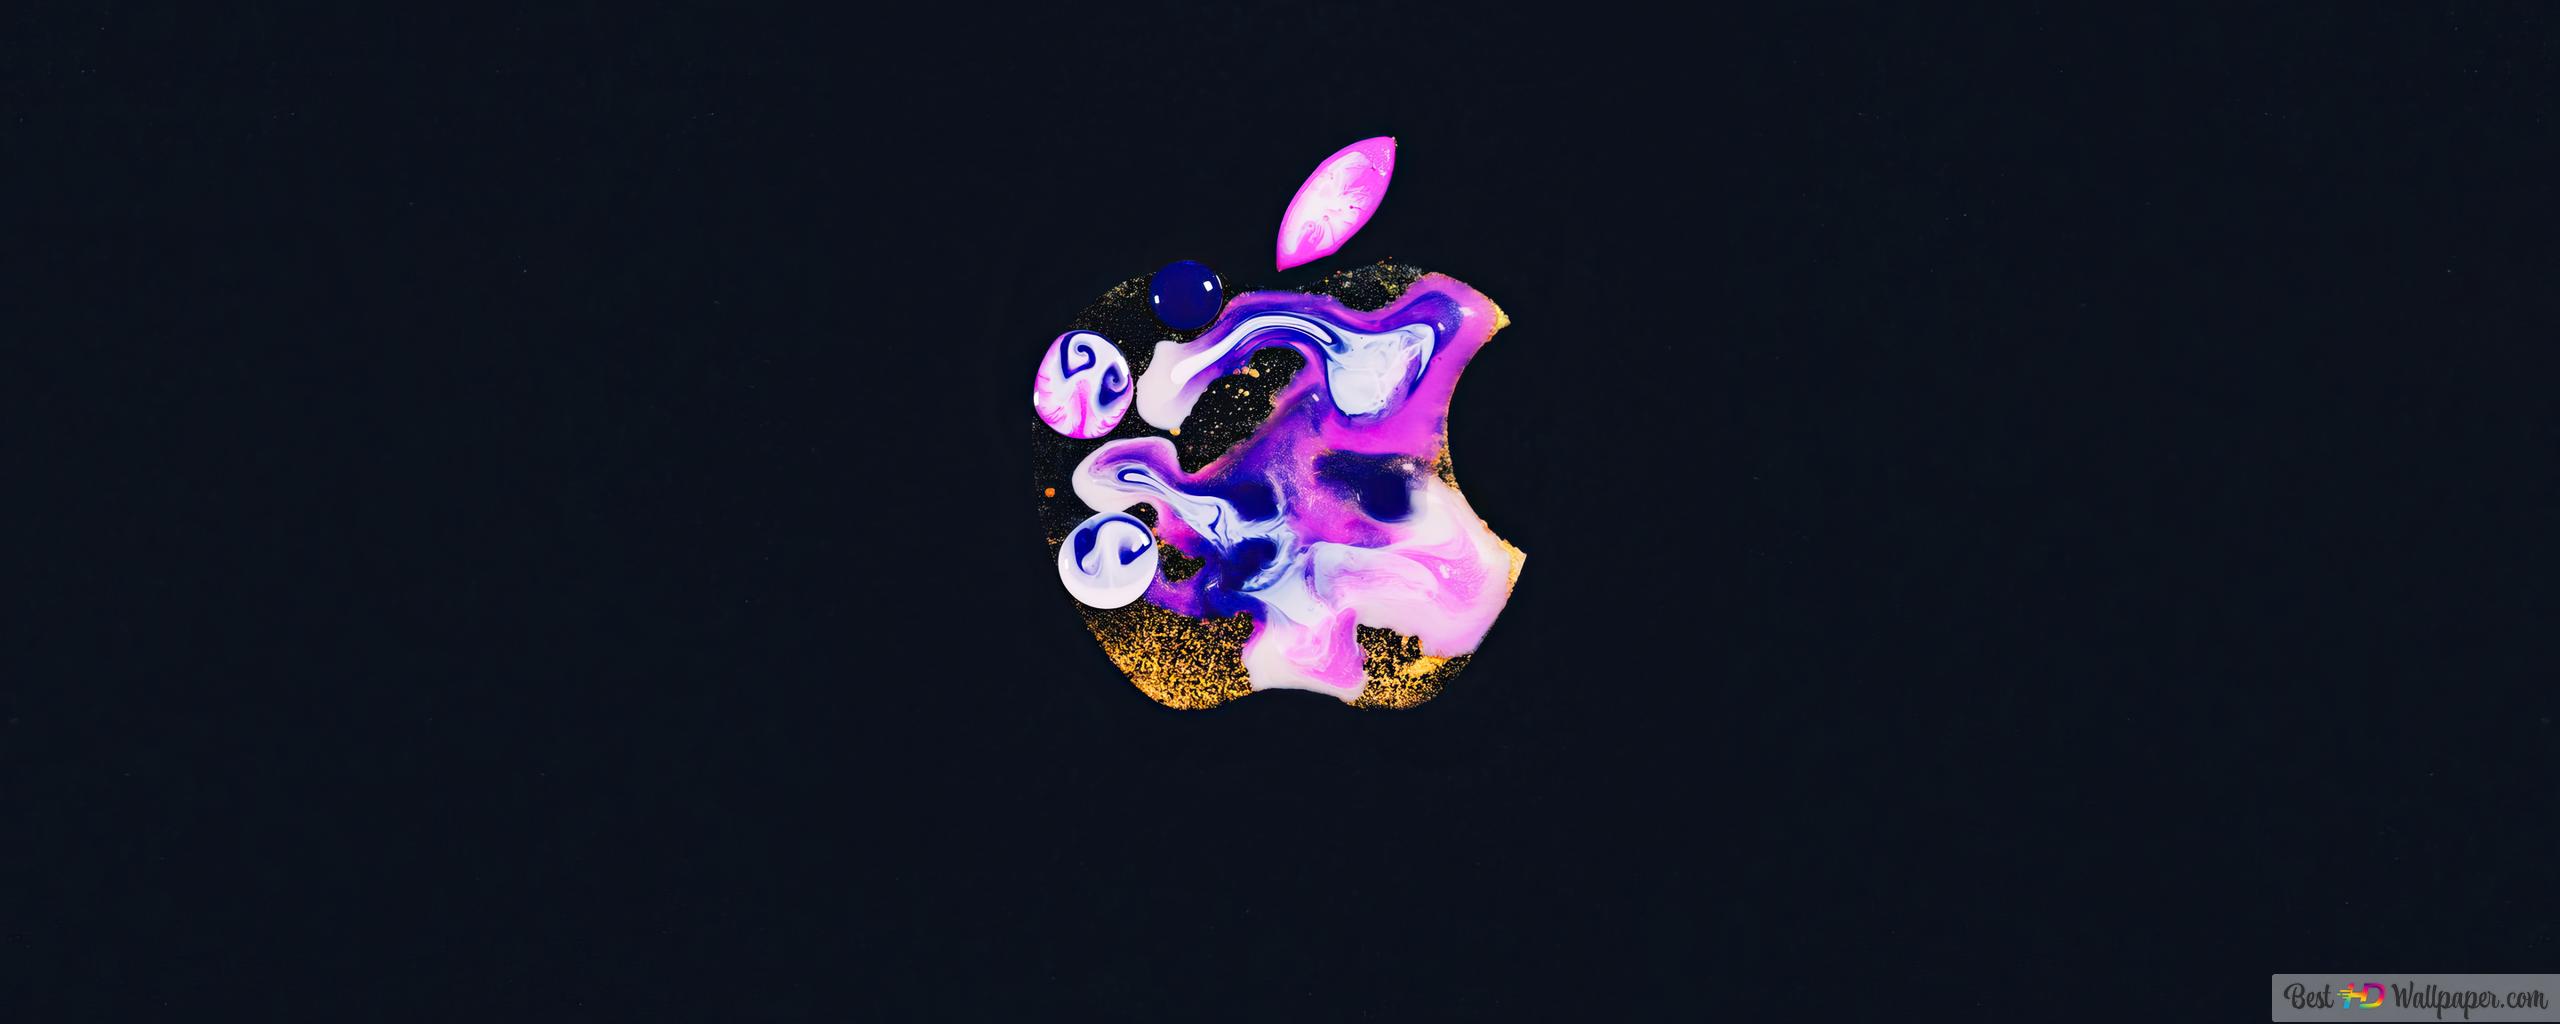 Iphone apple logo k wallpaper download